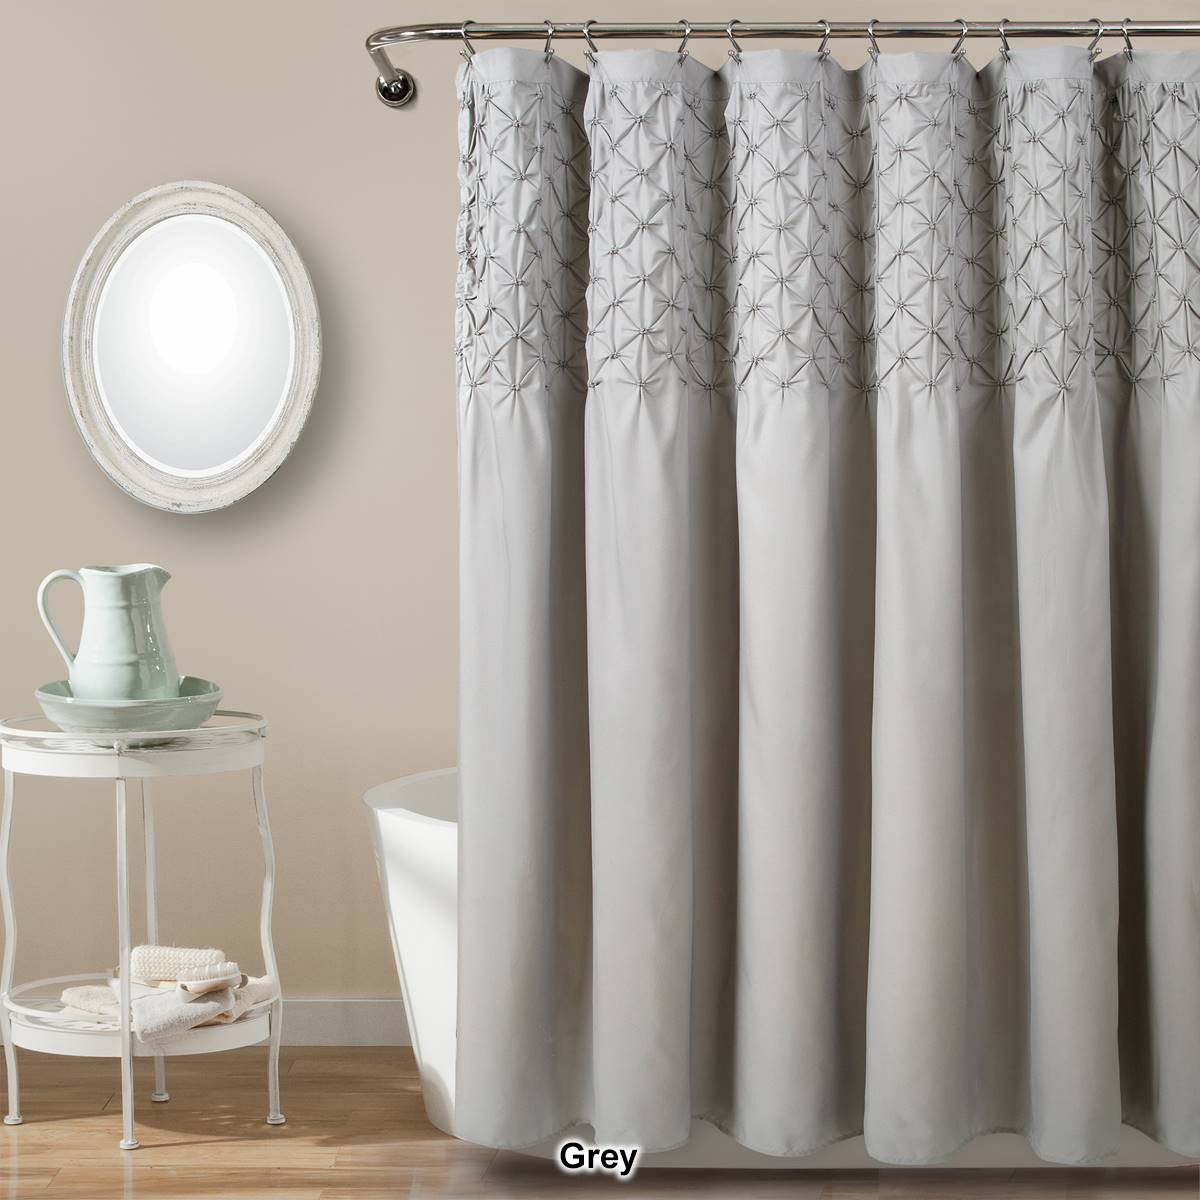 Lush Decor(R) Bayview Shower Curtain